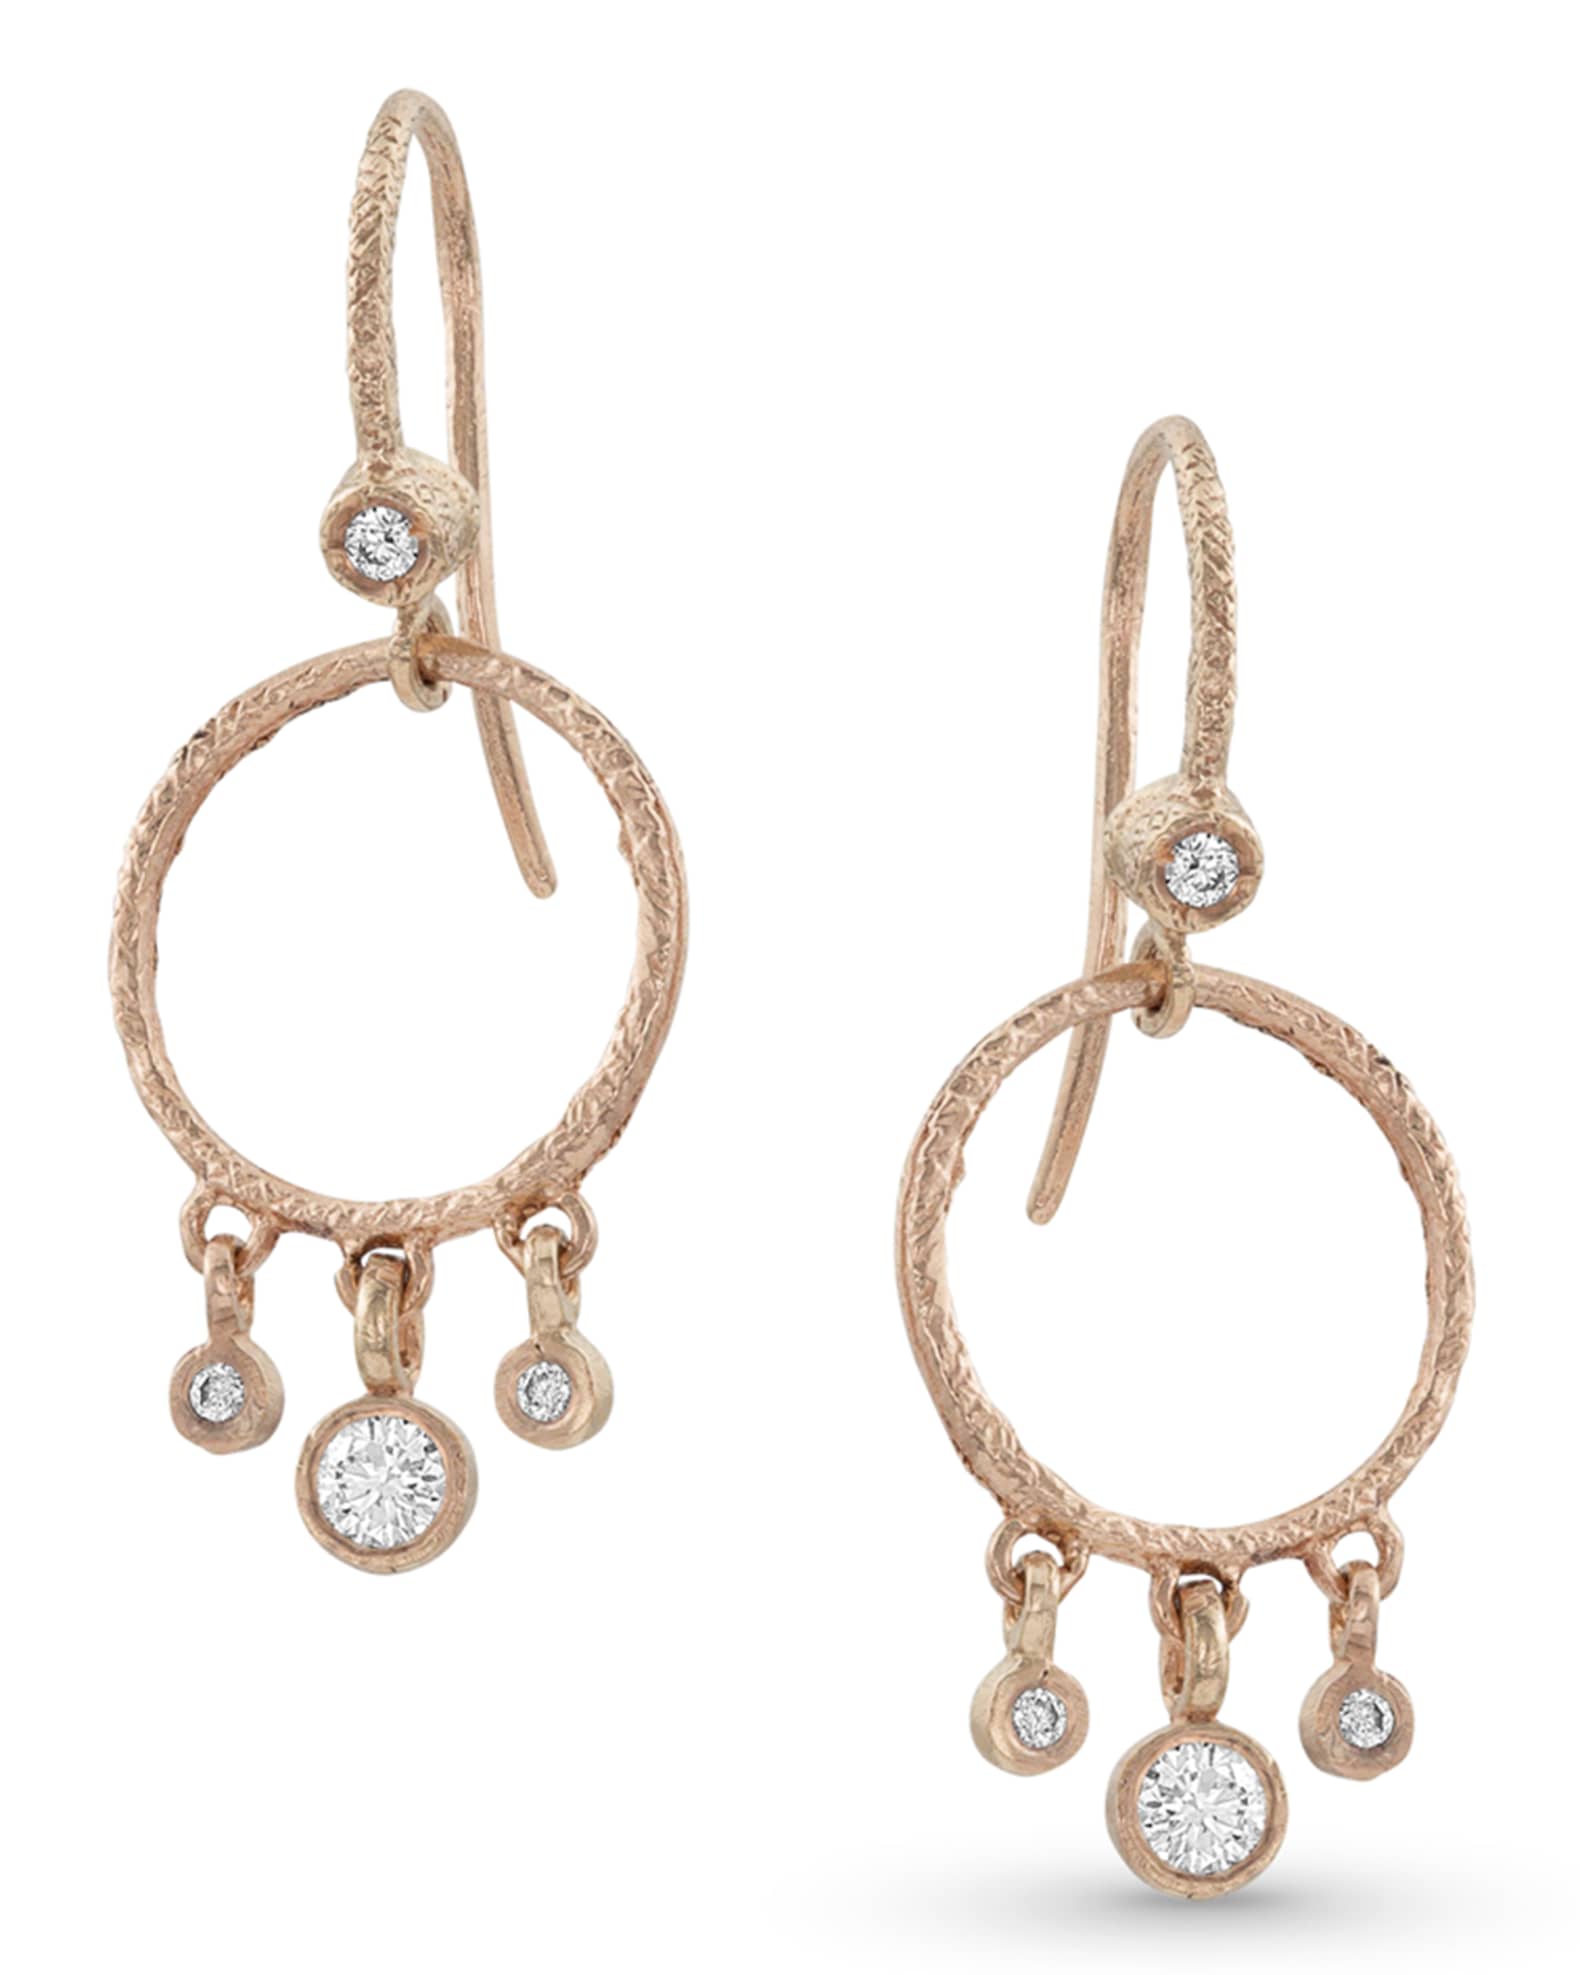 18kt gold fringe earrings with diamonds